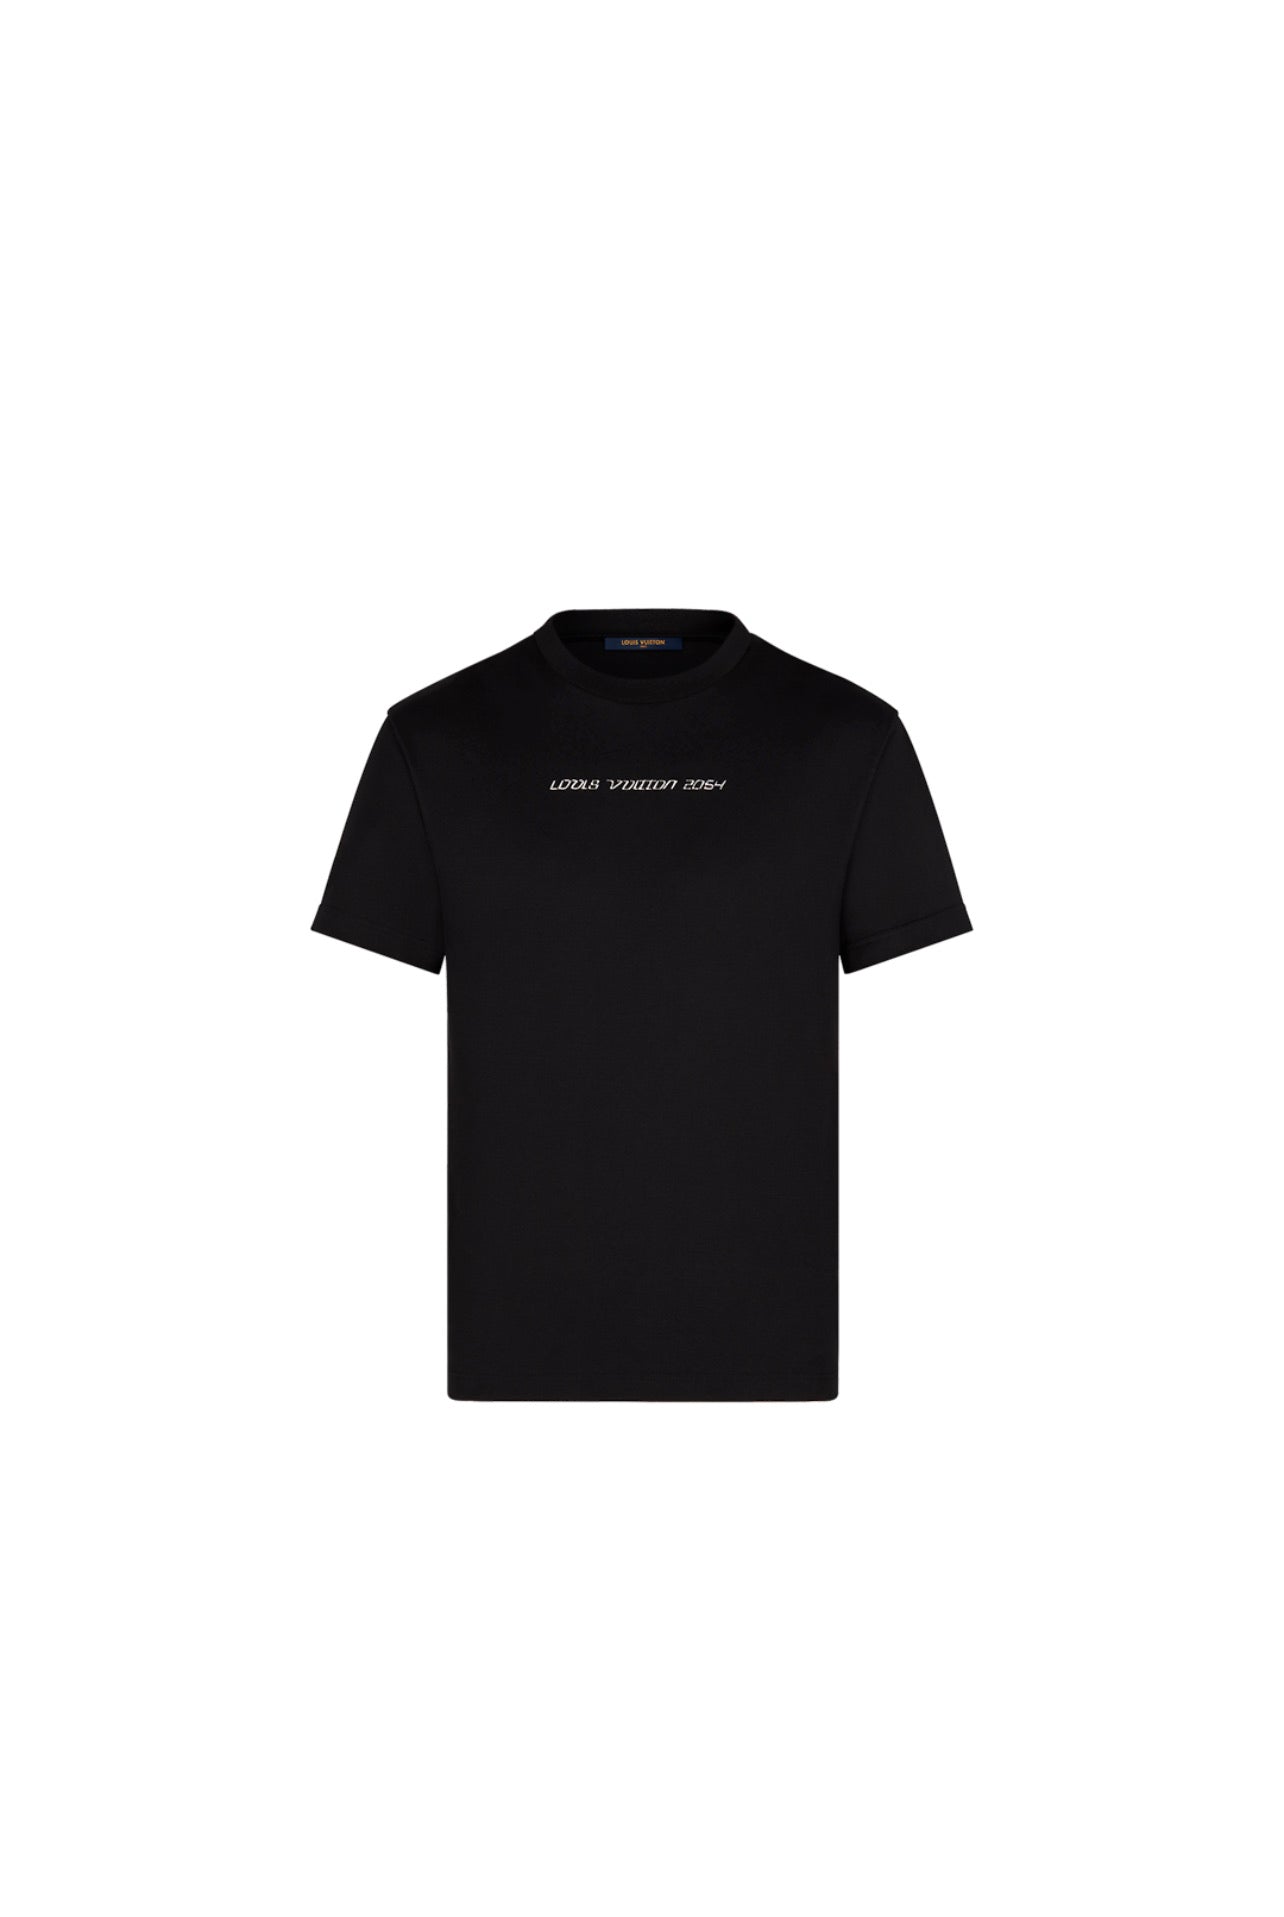 Louis Vuitton Monogram 2054 T-Shirt M - sorry_not_fame Mall